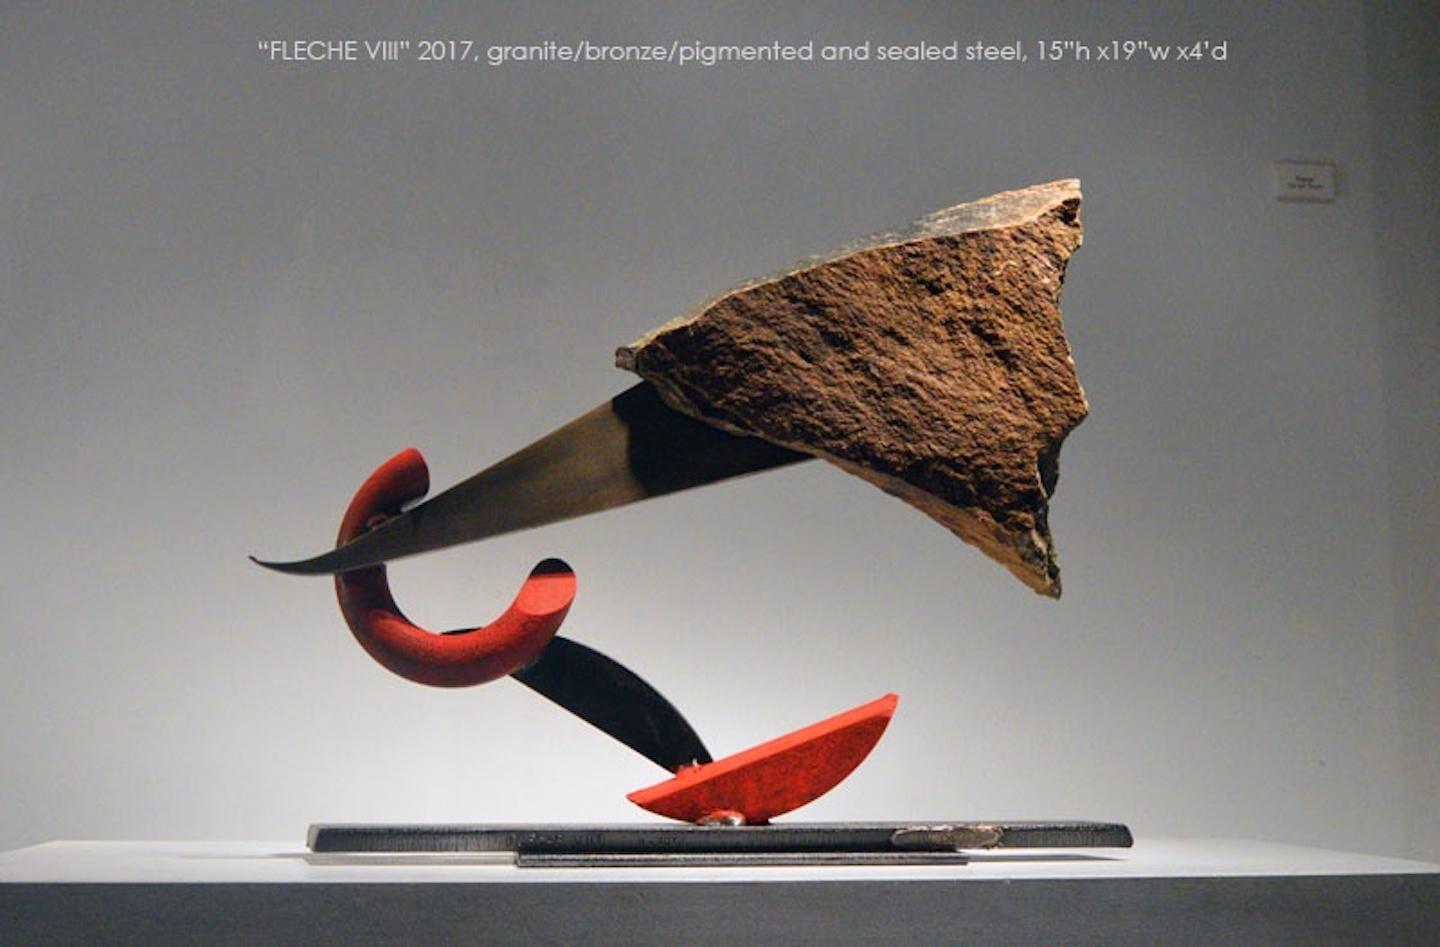 Fleche VIII - Sculpture by John Van Alstine